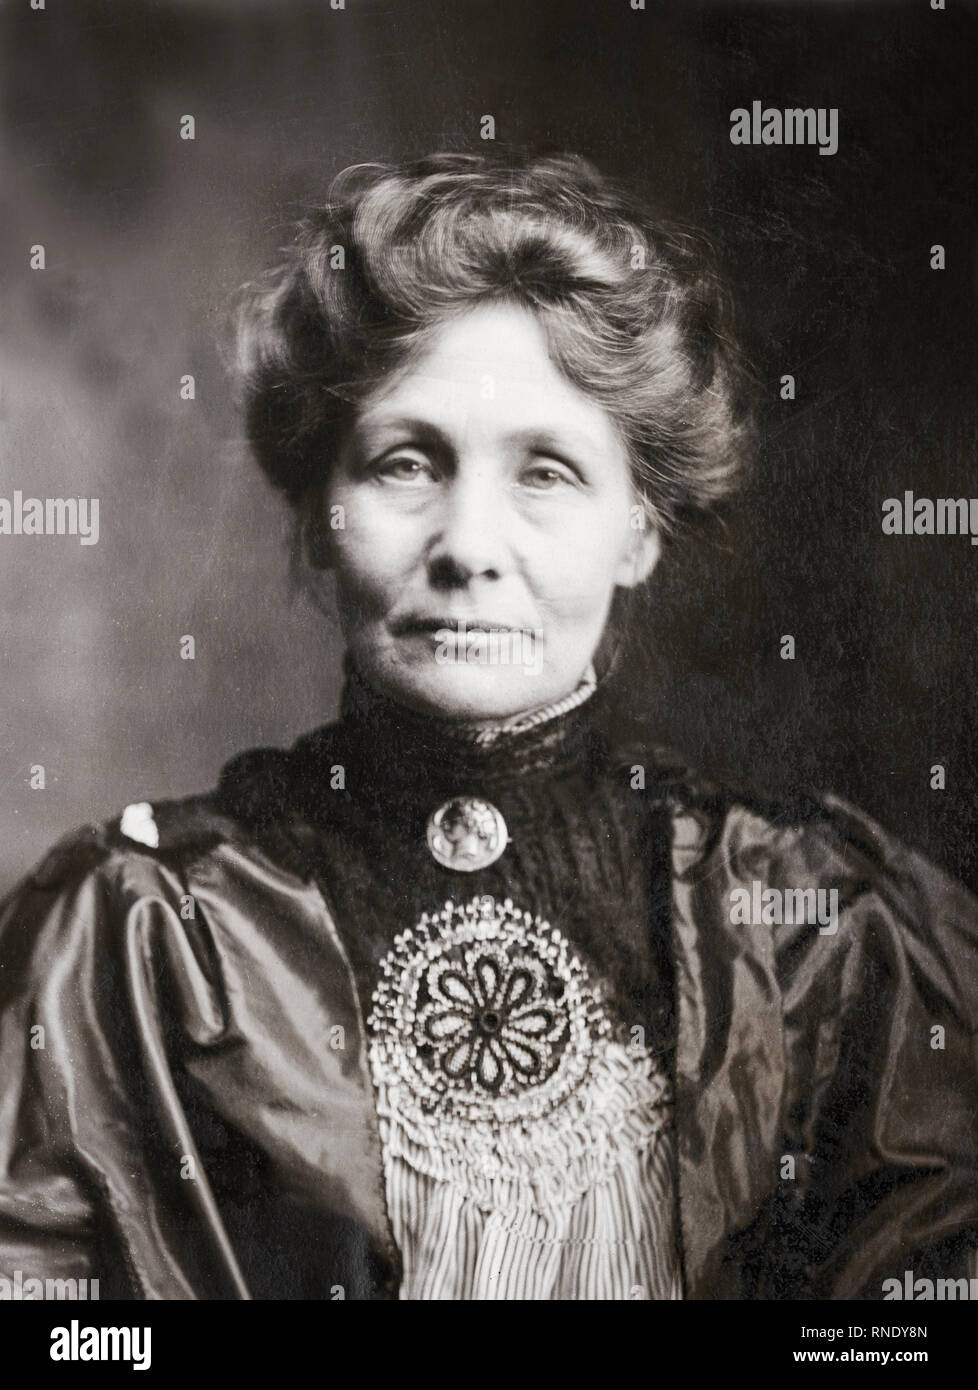 Emmeline Pankhurst portrait photograph, c. 1910 Stock Photo